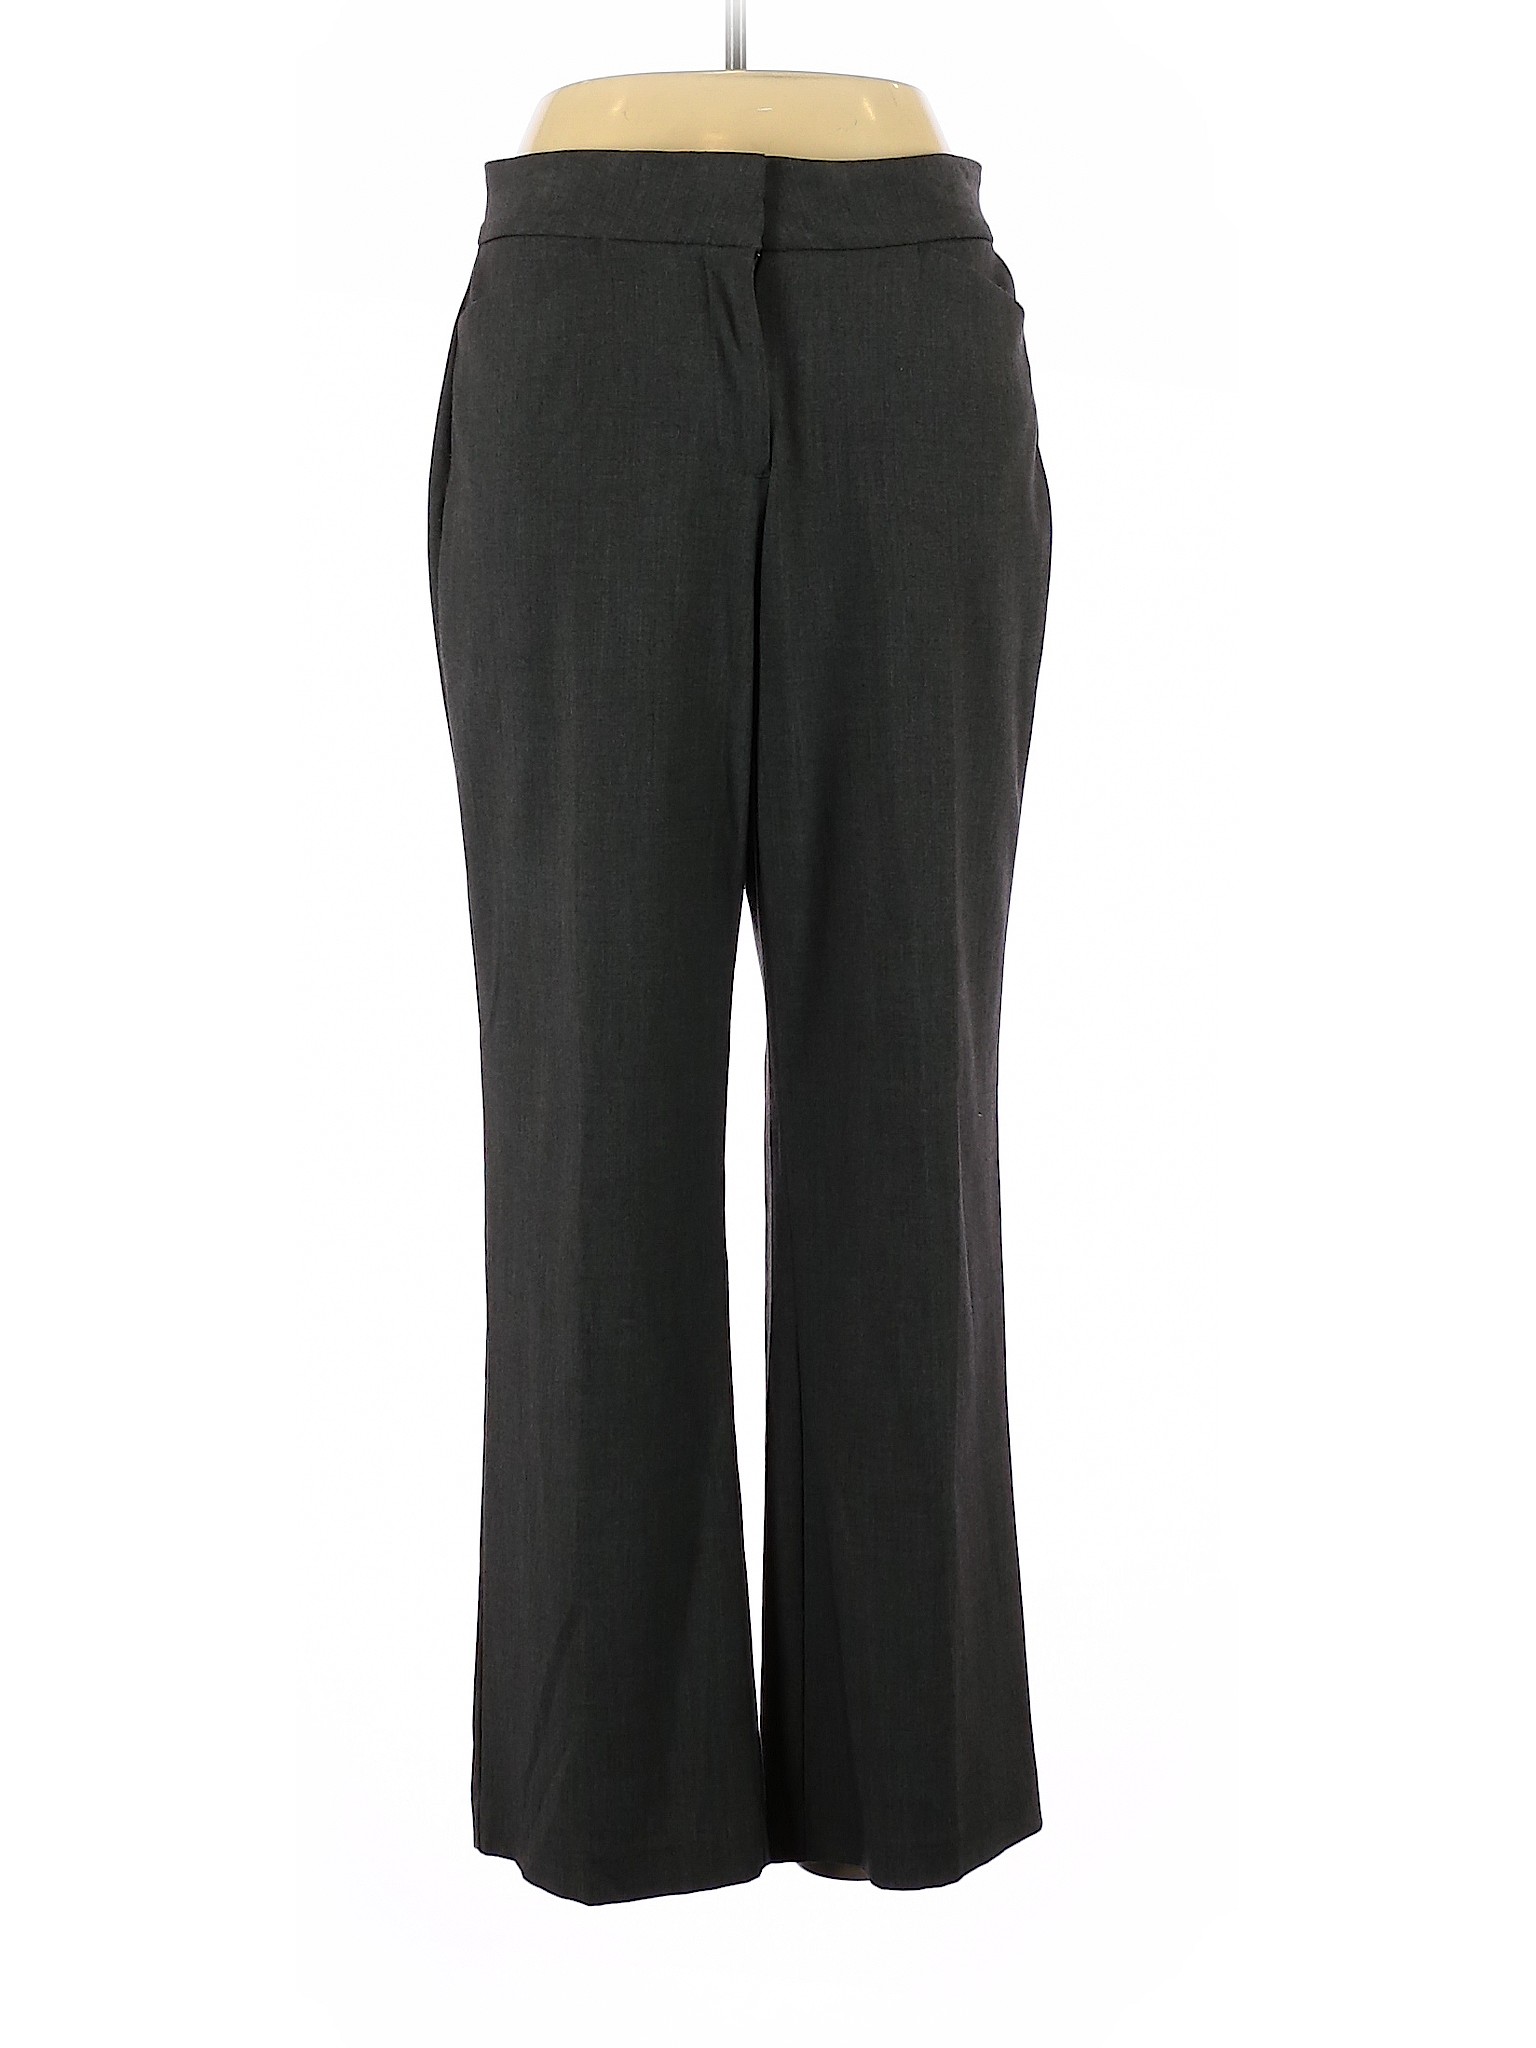 Dana Buchman Women Black Dress Pants 10 Petites | eBay